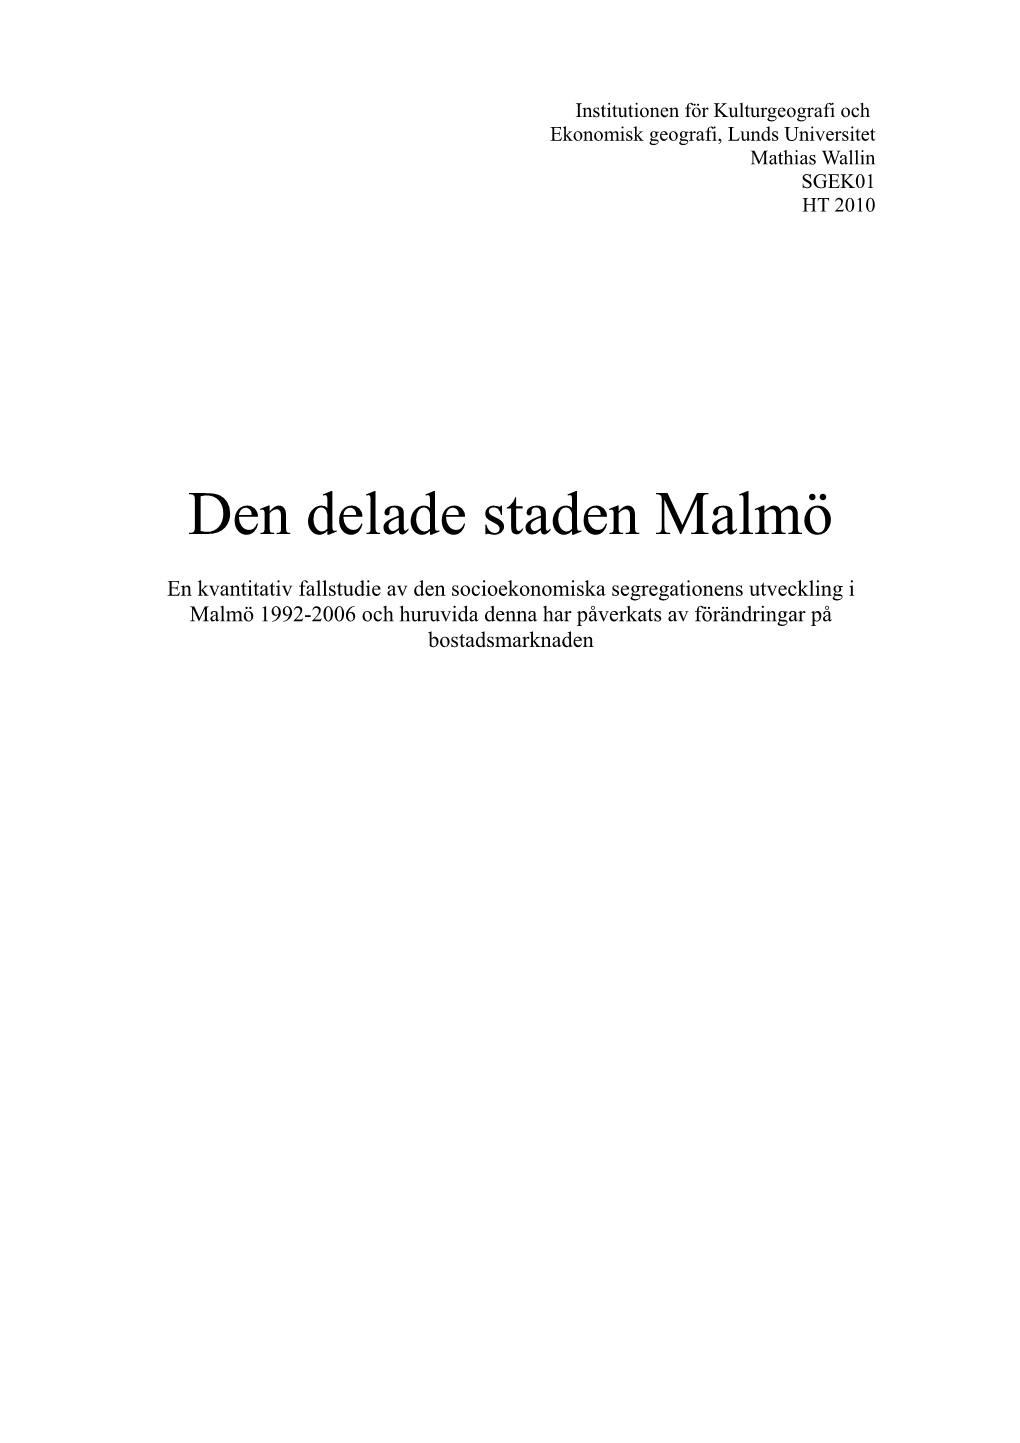 Den Delade Staden Malmö